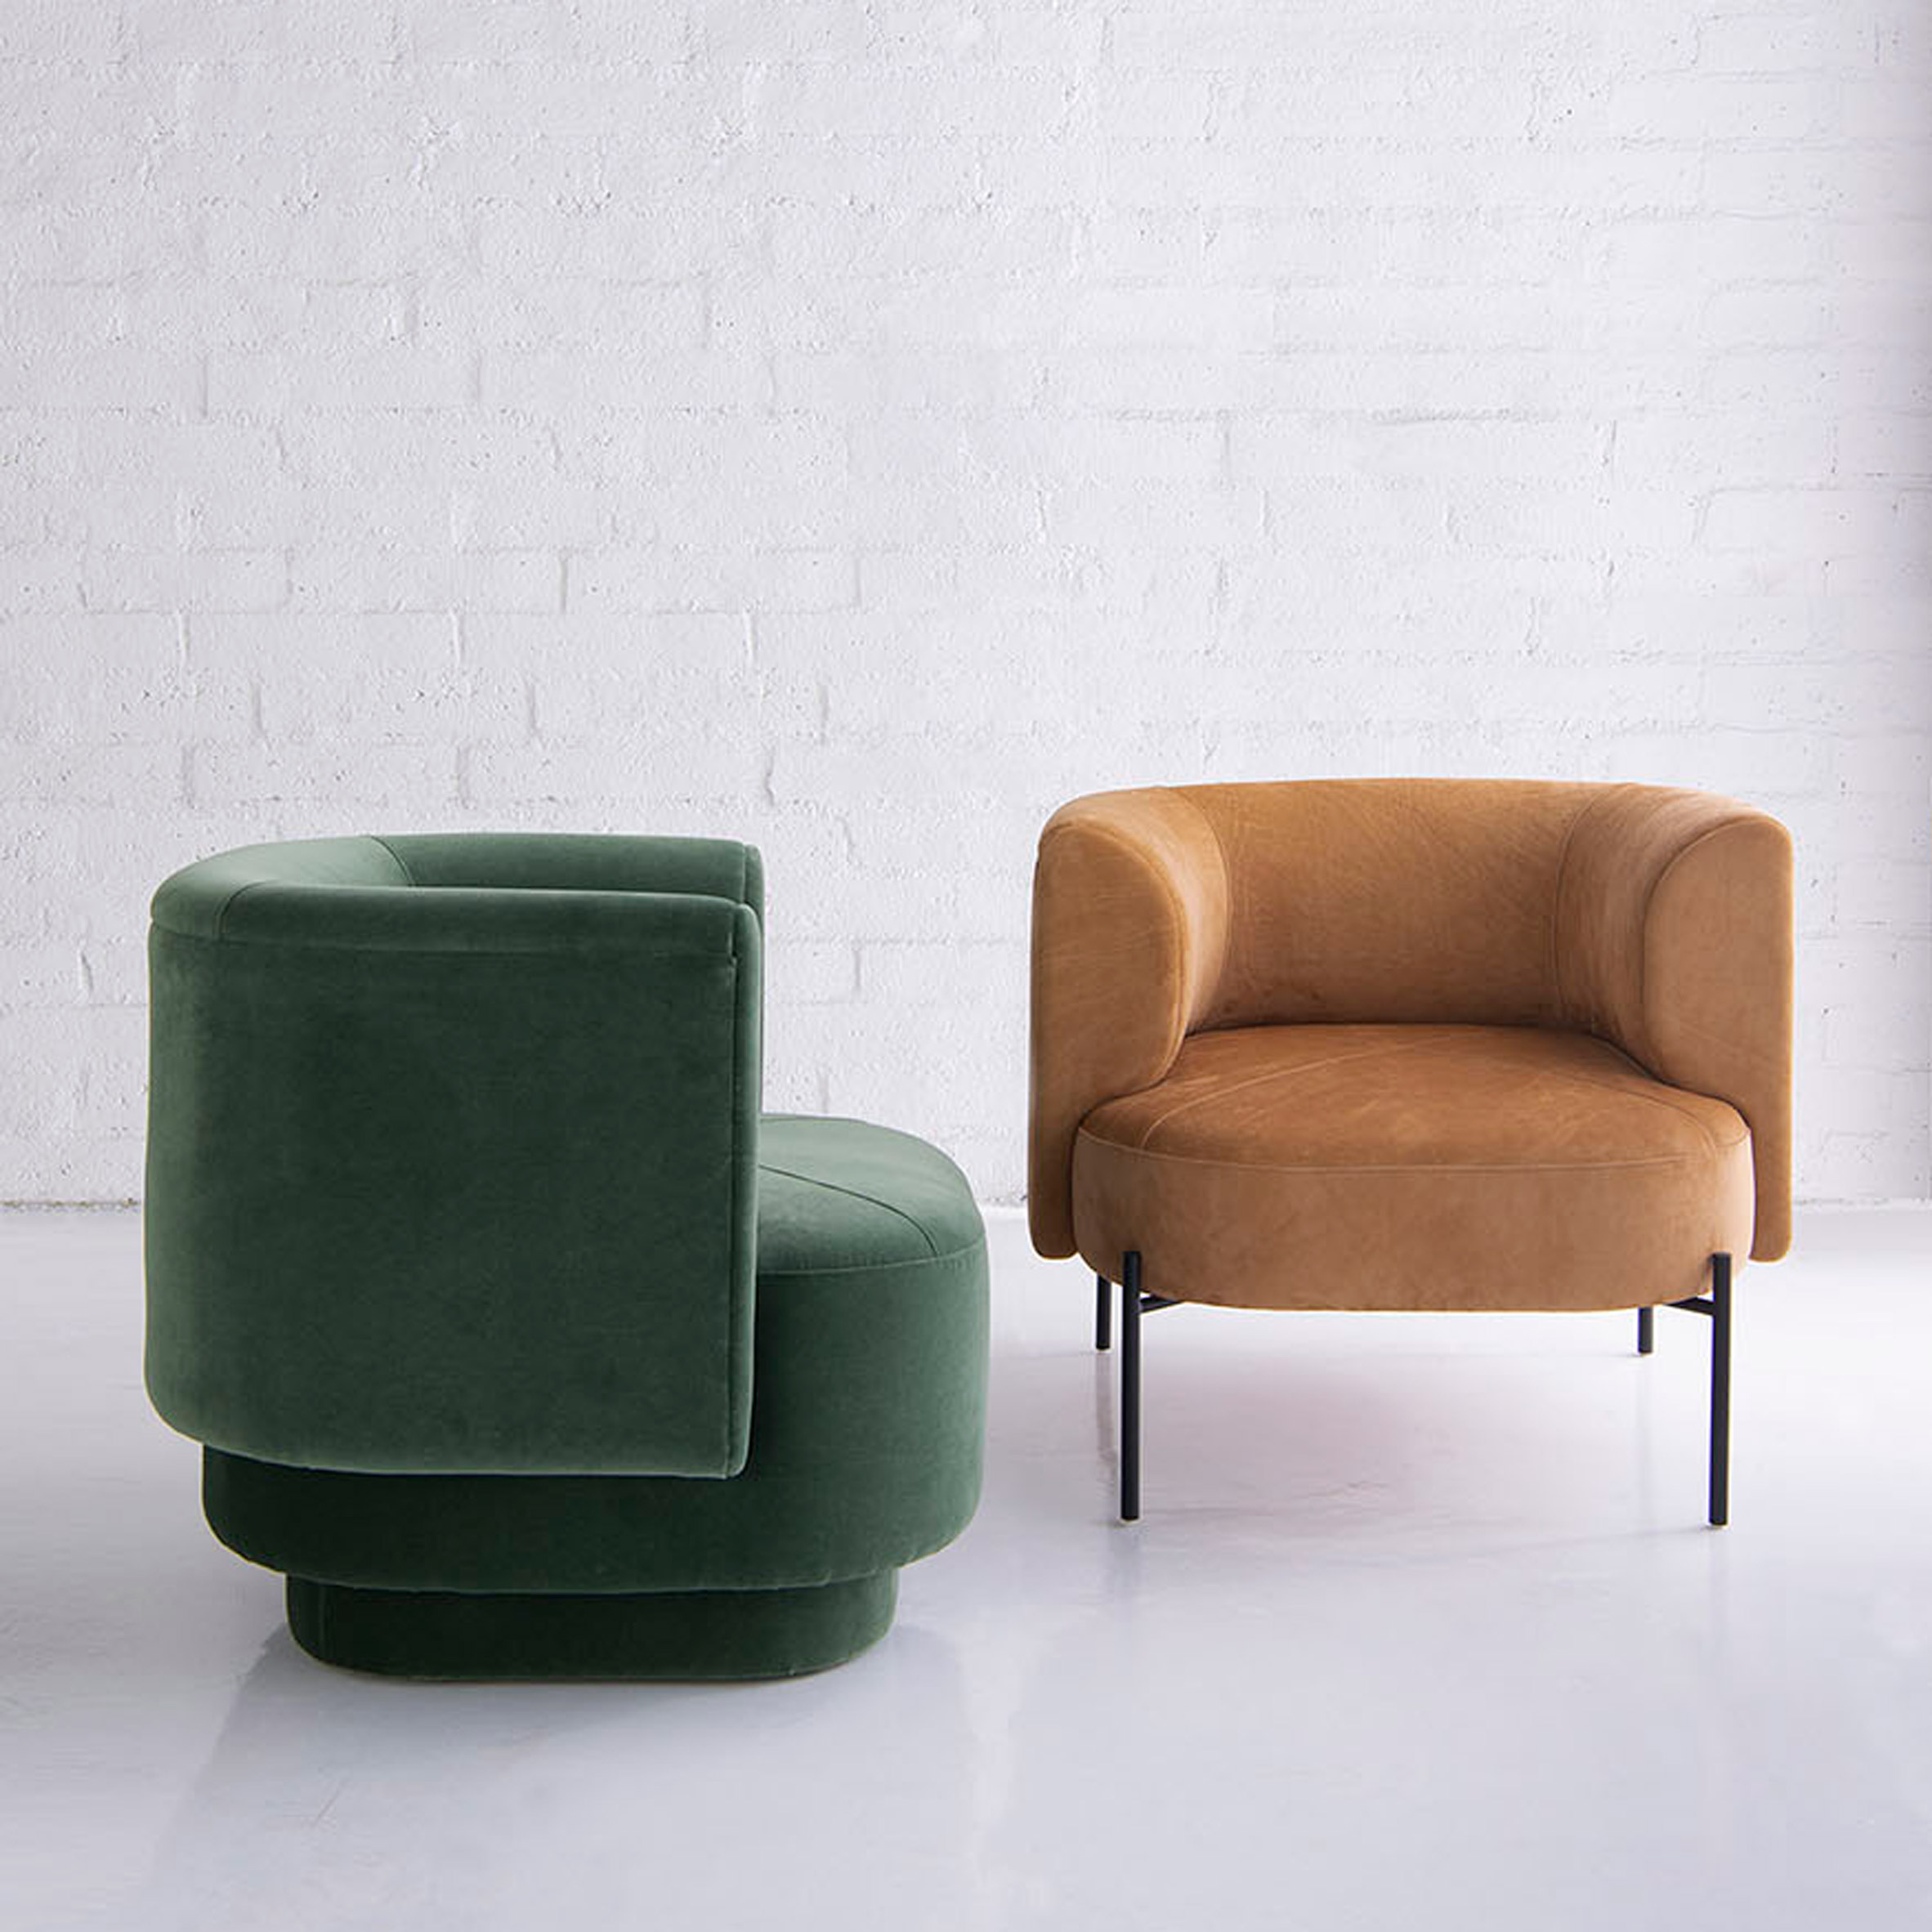 Capper lounge chair by Phase Design via Twentieth